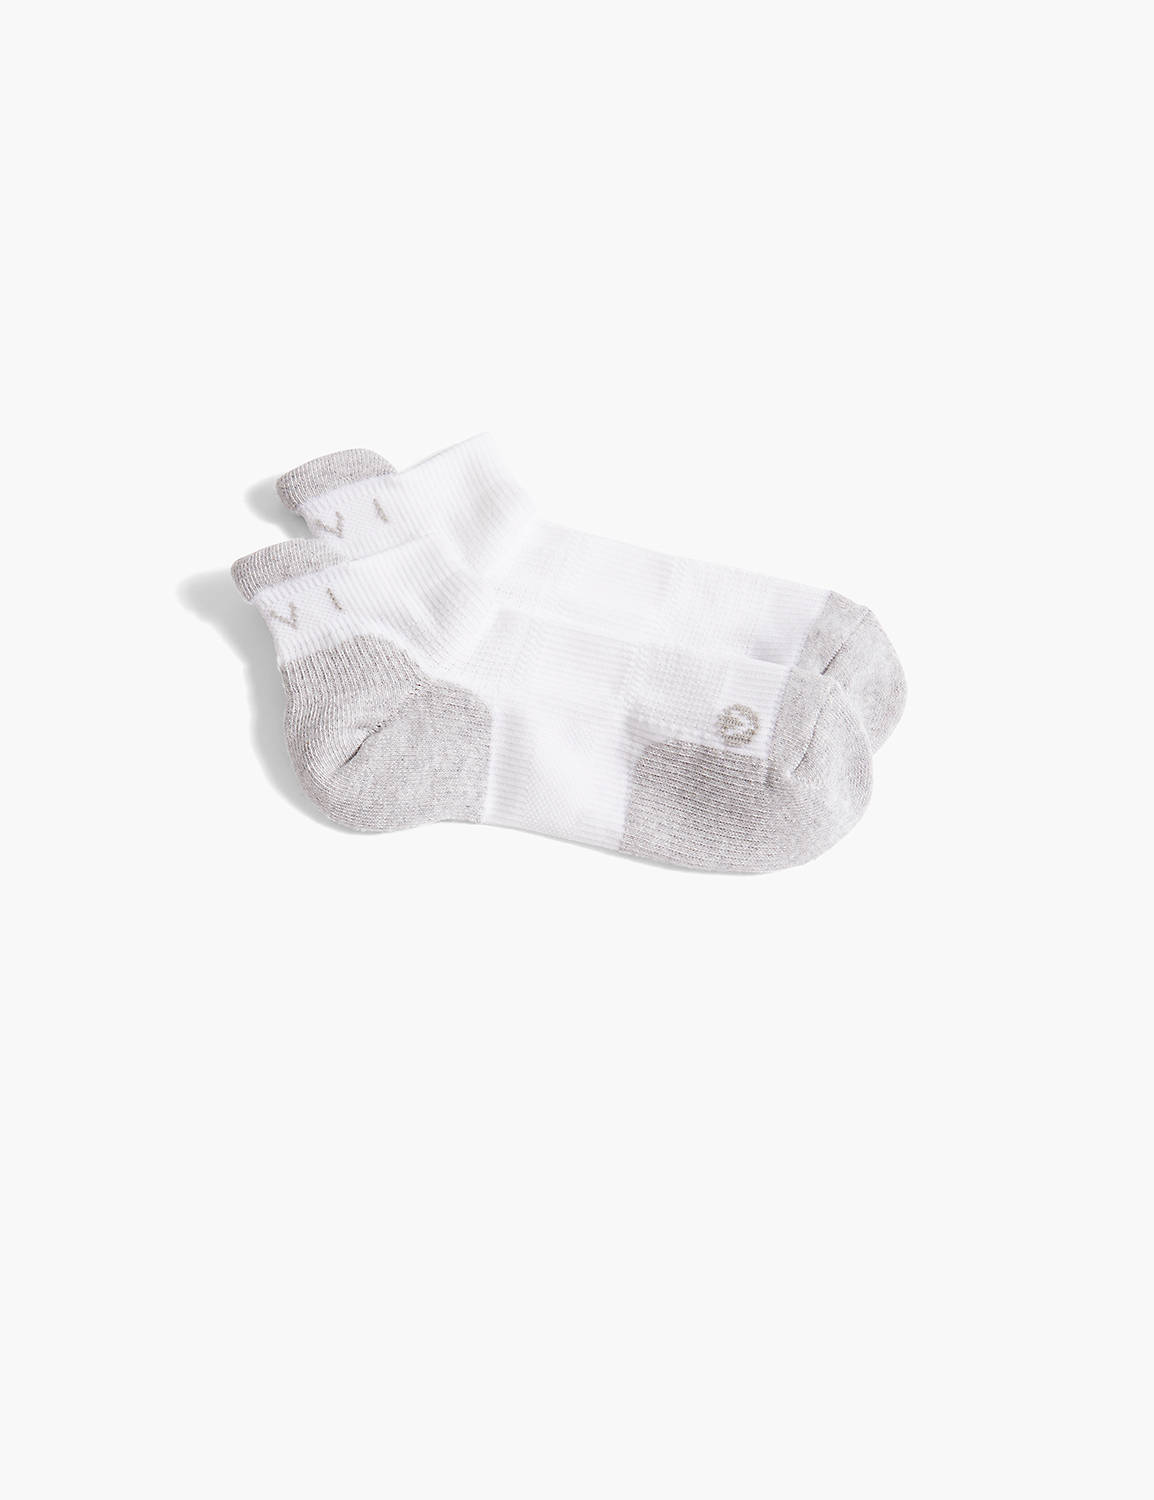 Livi Wicking White & Grey Sock Product Image 1